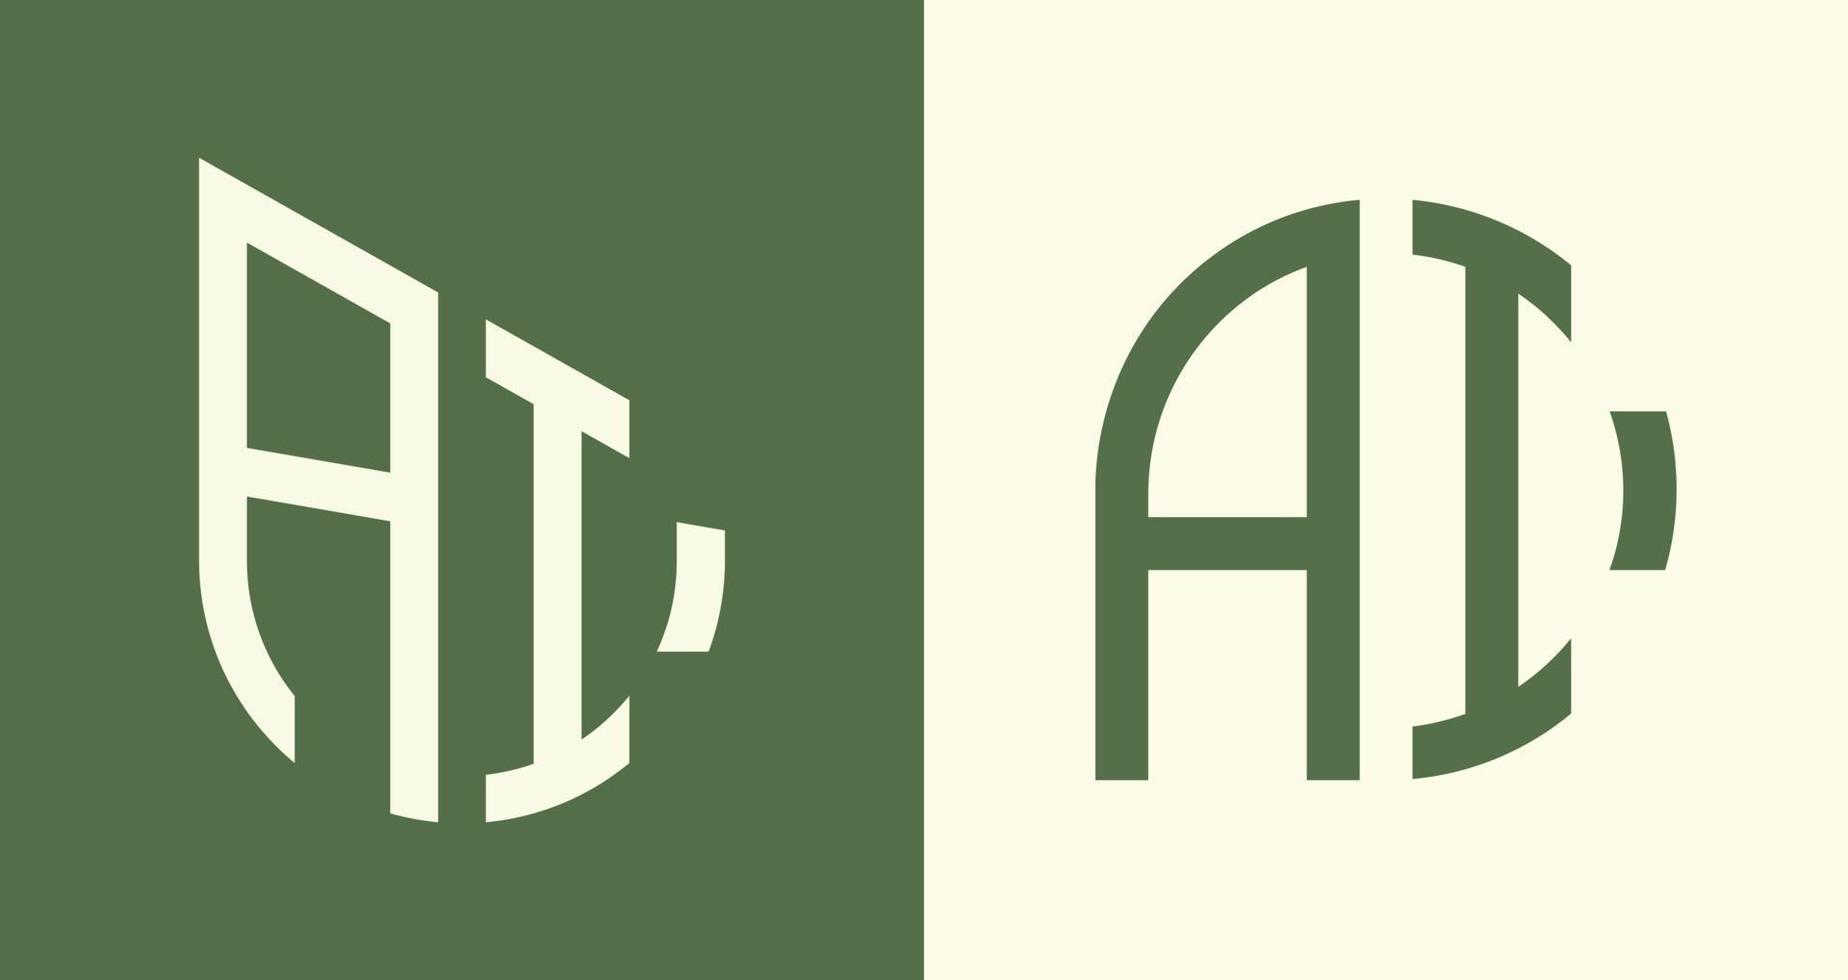 Creative simple Initial Letters AI Logo Designs Bundle. vector